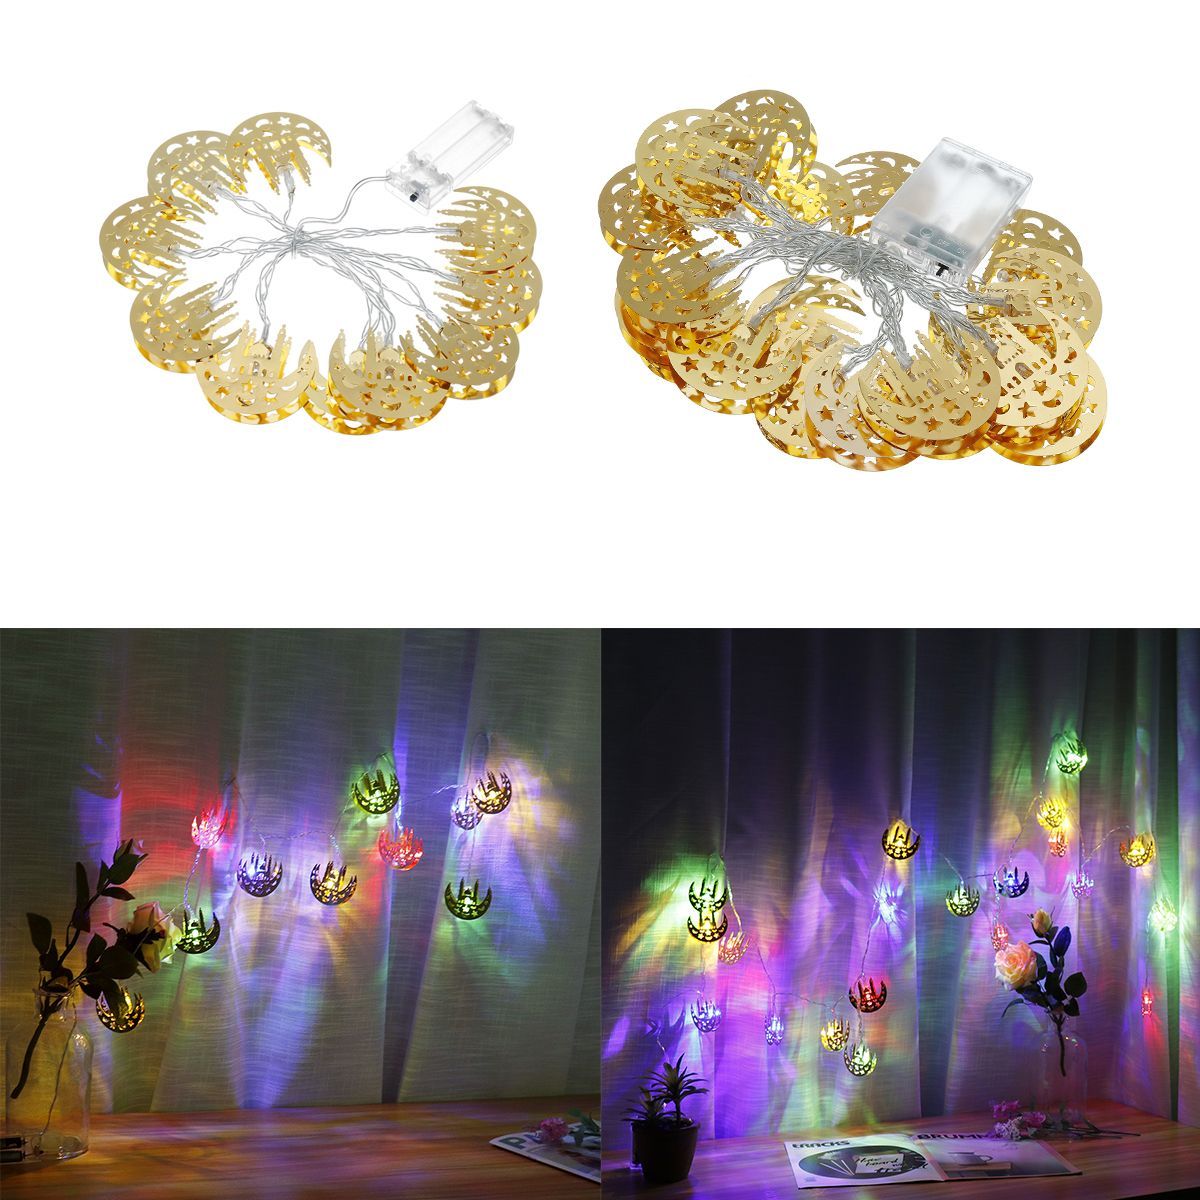 LED-String-Lights-Golden-Castle-Ramadan-Decoration-for-Party-Bedroom-1670155